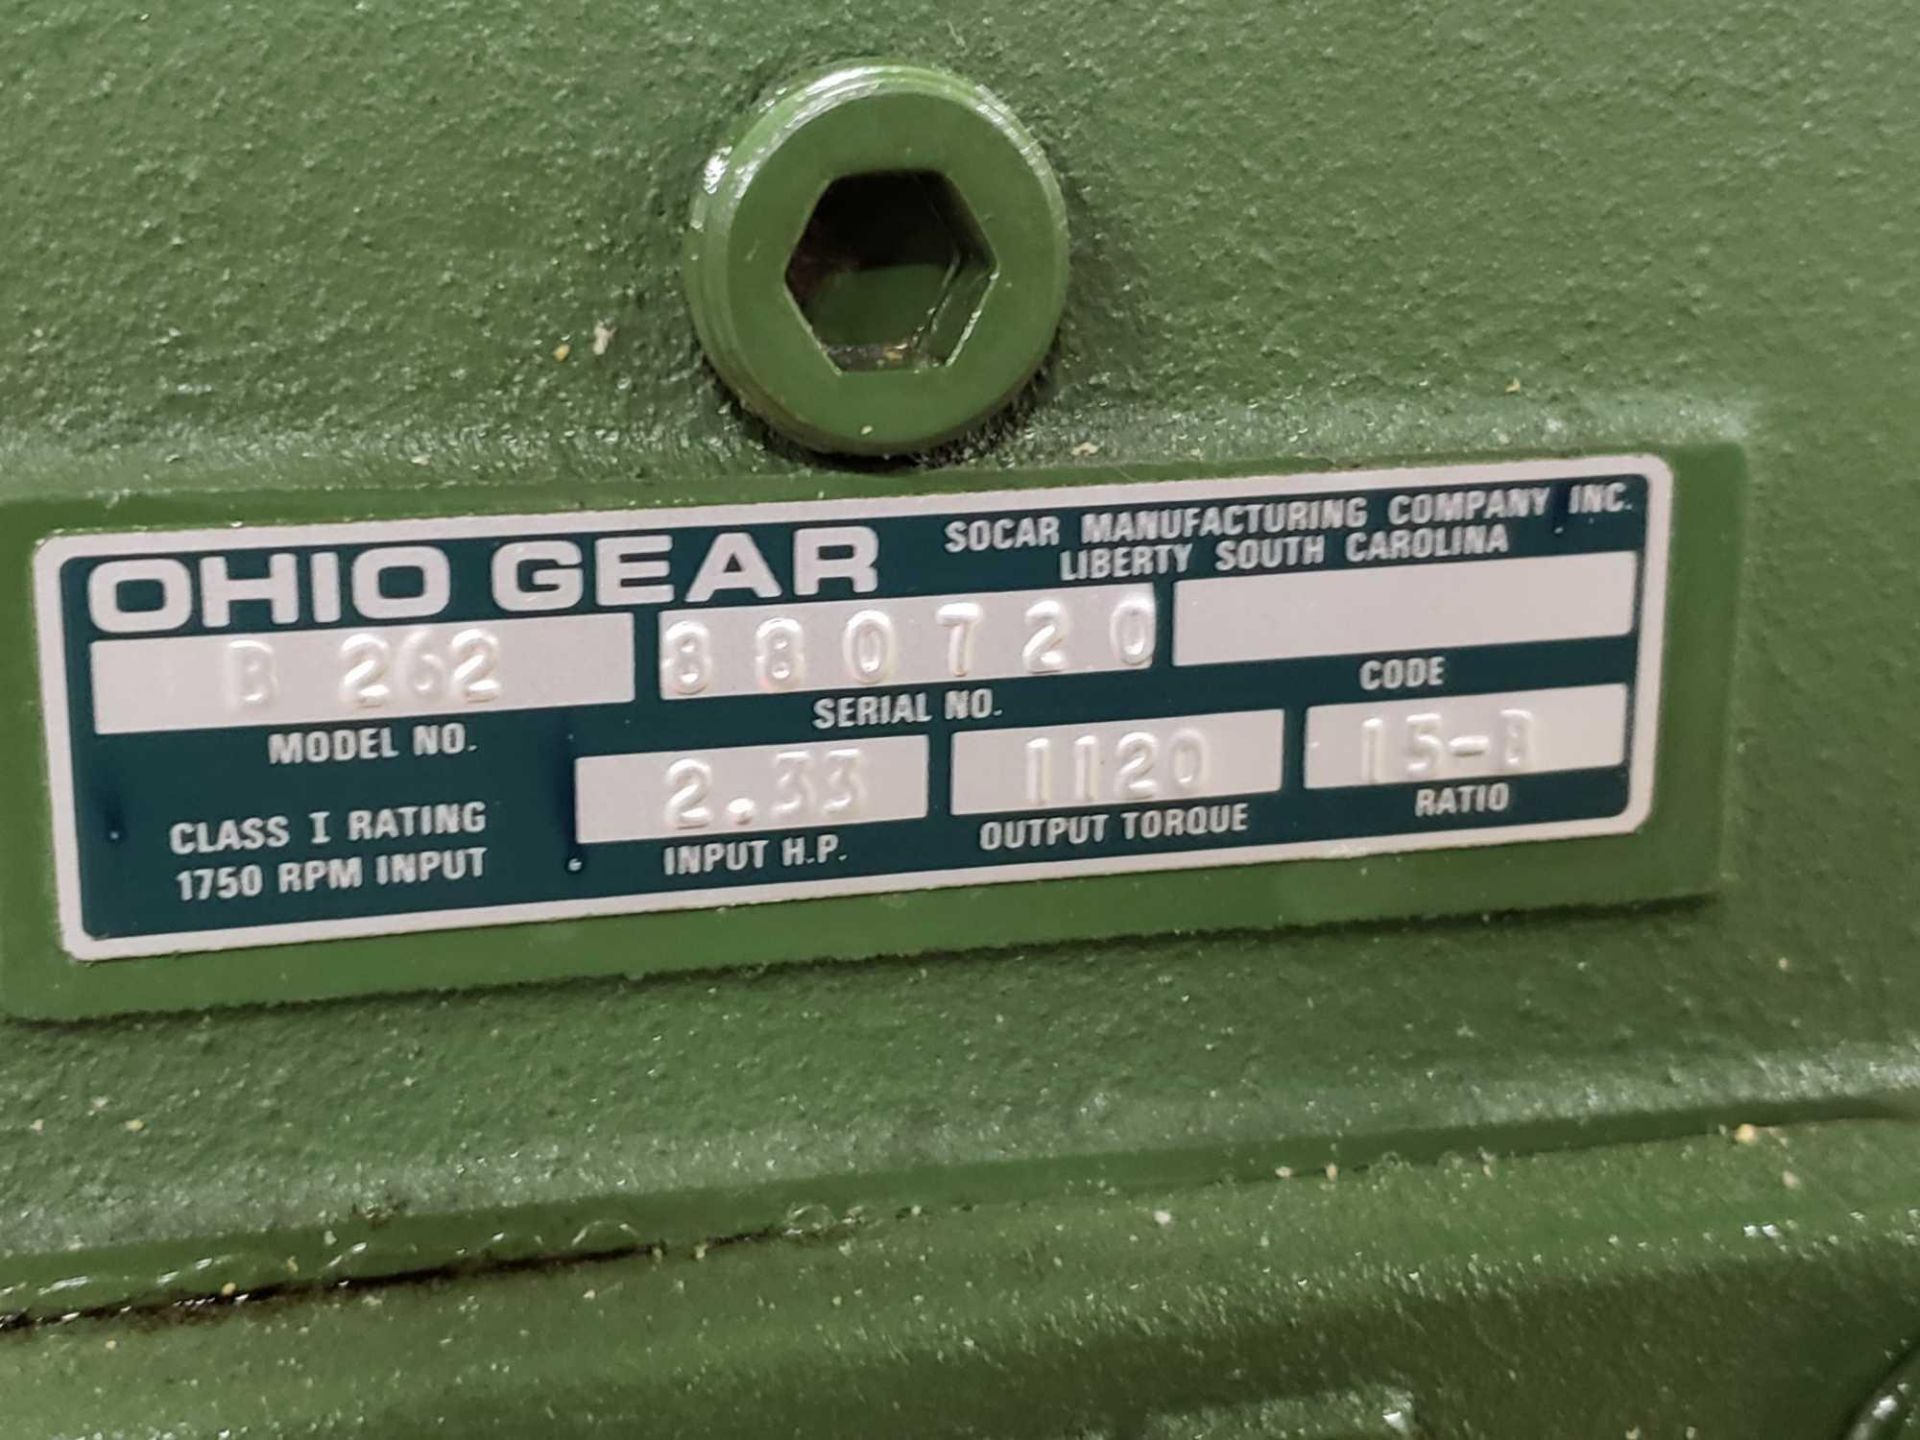 Ohio Gear model B-262 speed reducer gear box. Ratio 15-B. New in box. - Image 2 of 2